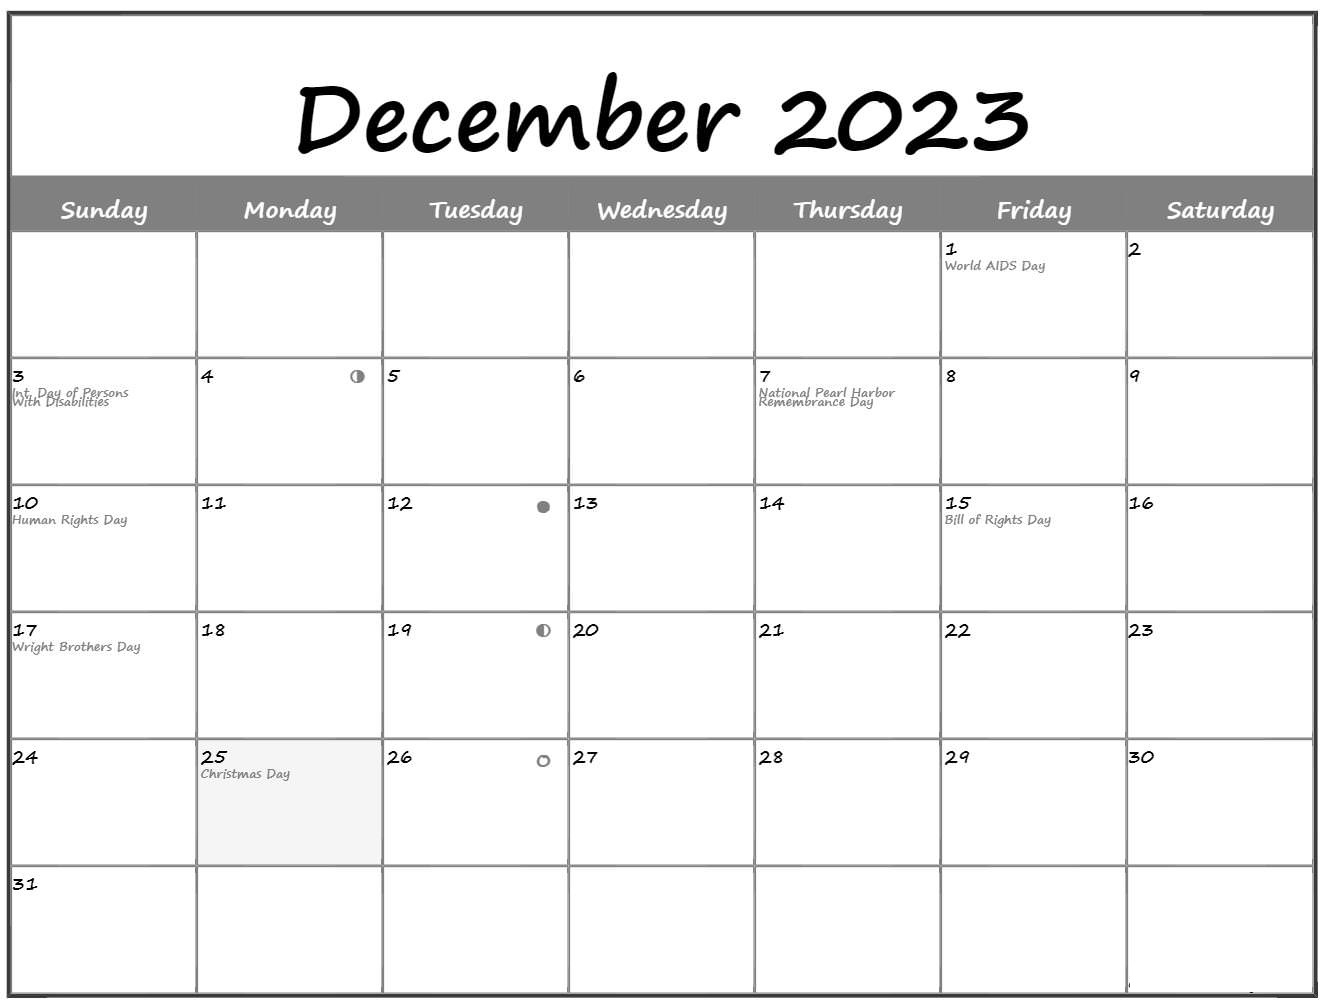 December 2023 Lunar Phase Calendar